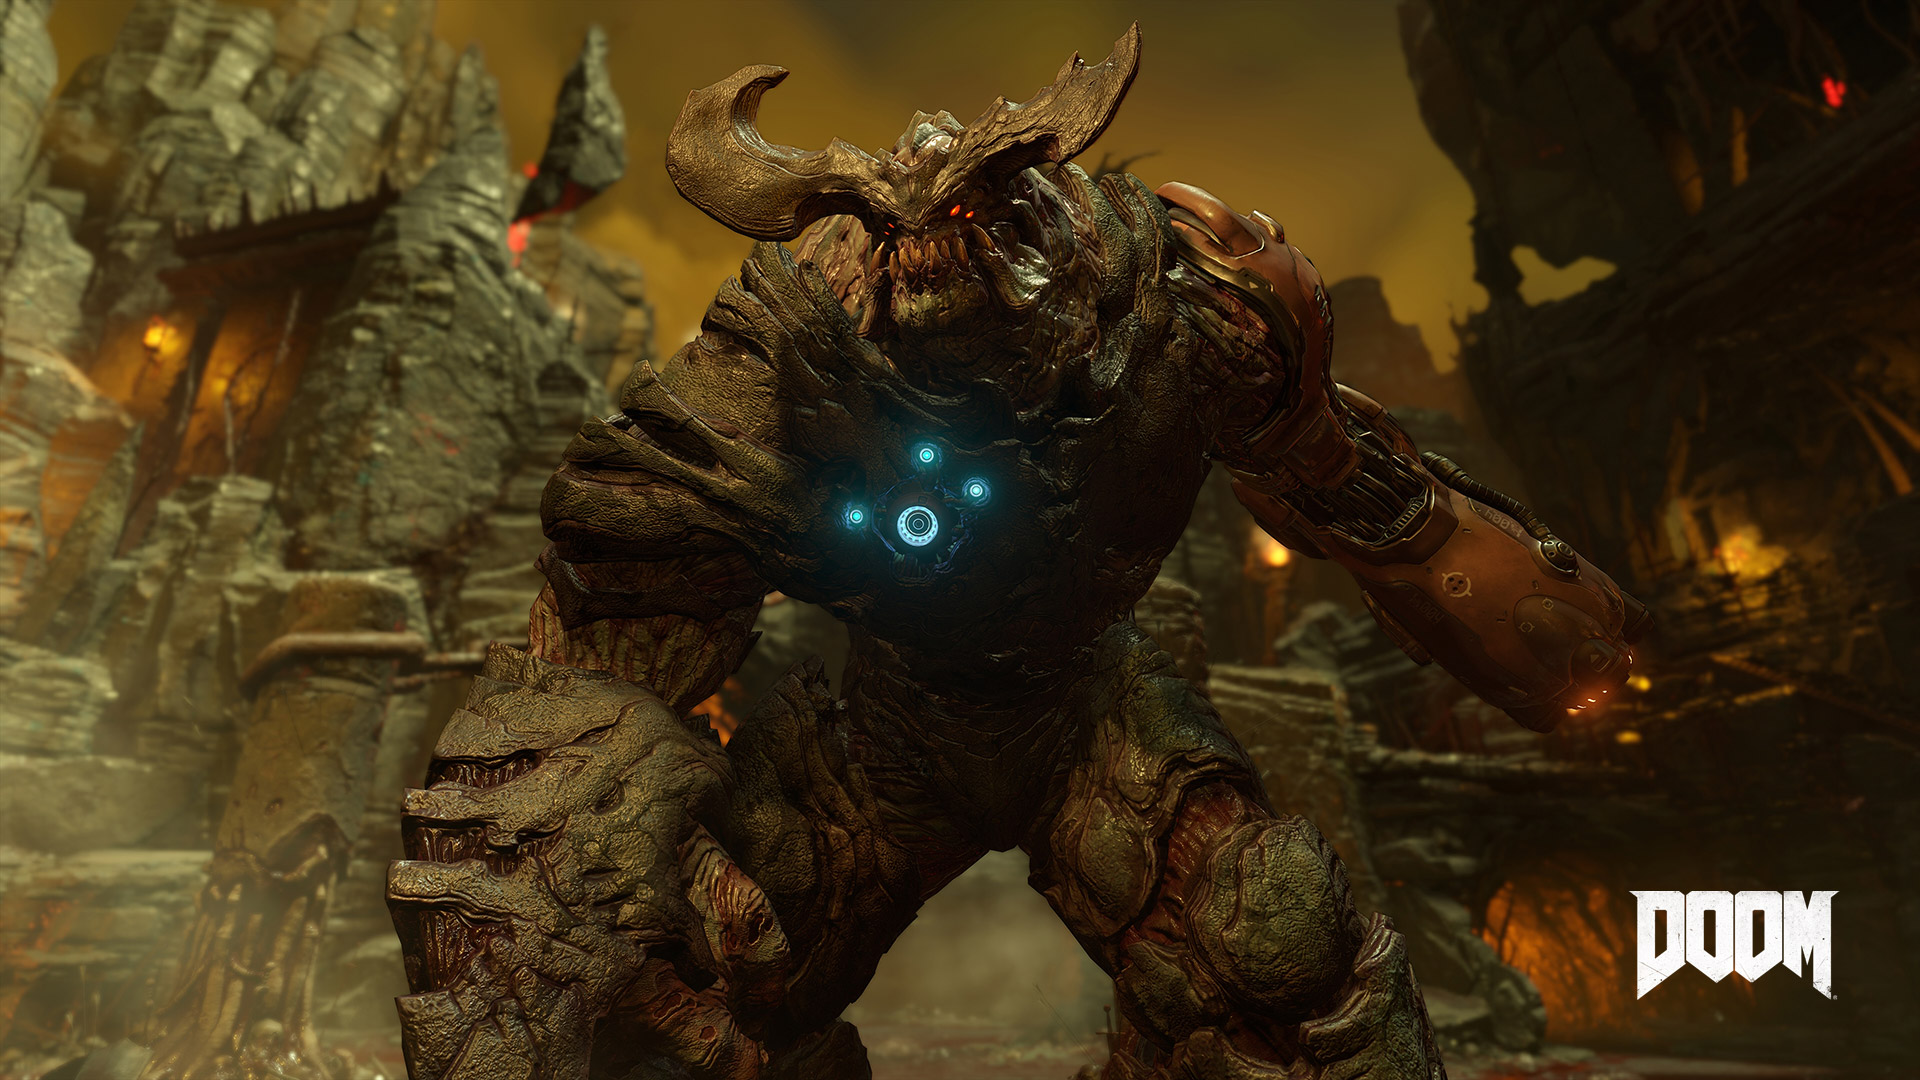 REVEALED: “Doom” Cinematic Trailer - Fight Like Hell